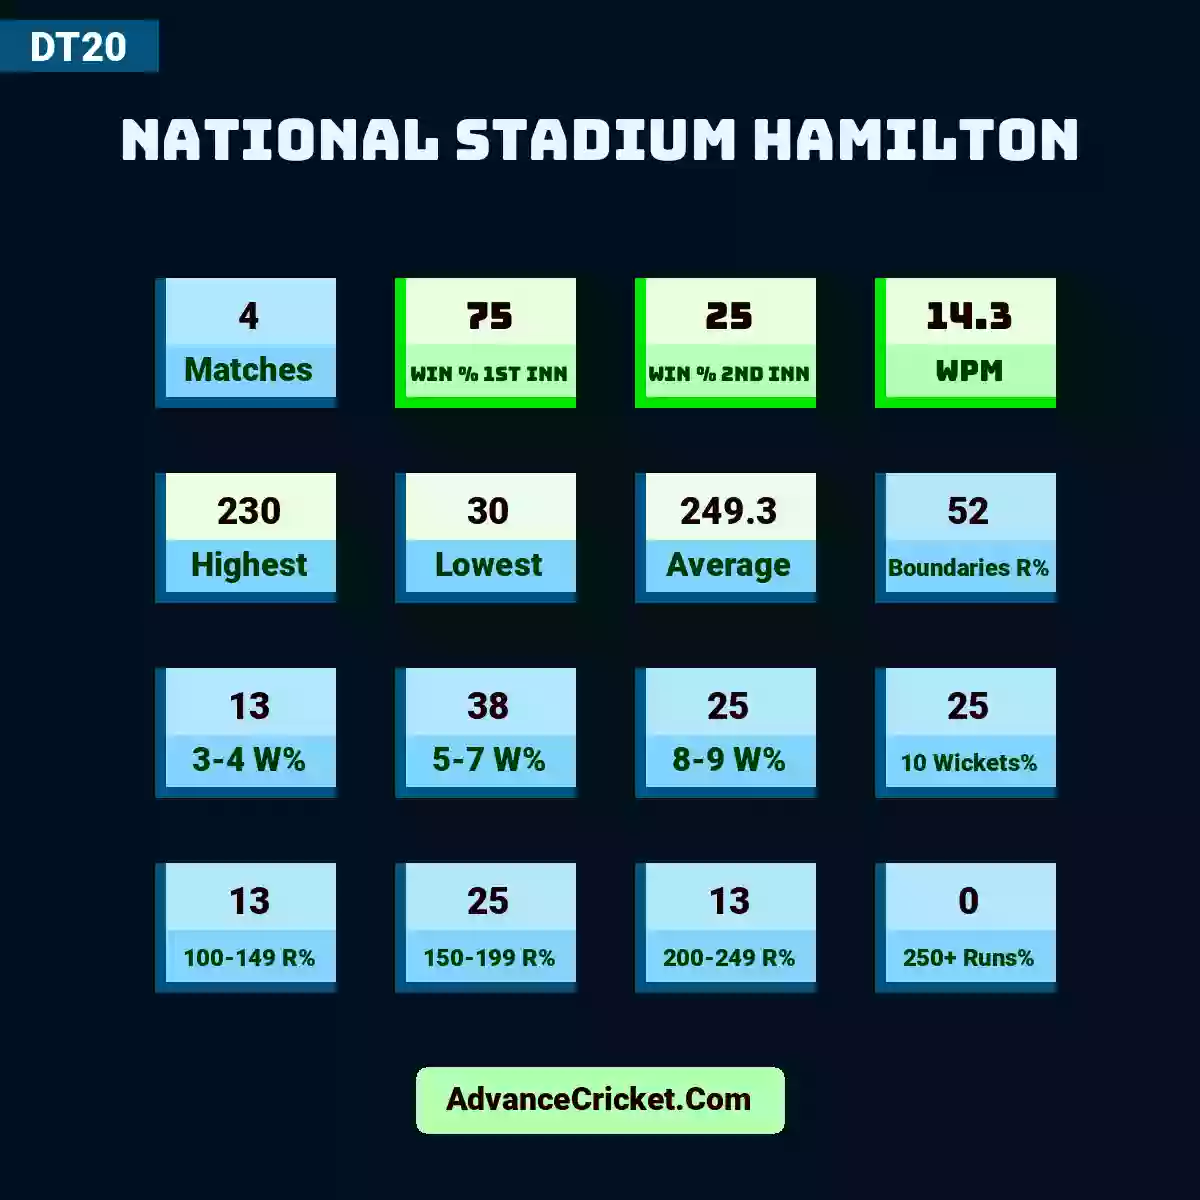 Image showing National Stadium Hamilton with Matches: 4, Win % 1st Inn: 75, Win % 2nd Inn: 25, WPM: 14.3, Highest: 230, Lowest: 30, Average: 249.3, Boundaries R%: 52, 3-4 W%: 13, 5-7 W%: 38, 8-9 W%: 25, 10 Wickets%: 25, 100-149 R%: 13, 150-199 R%: 25, 200-249 R%: 13, 250+ Runs%: 0.